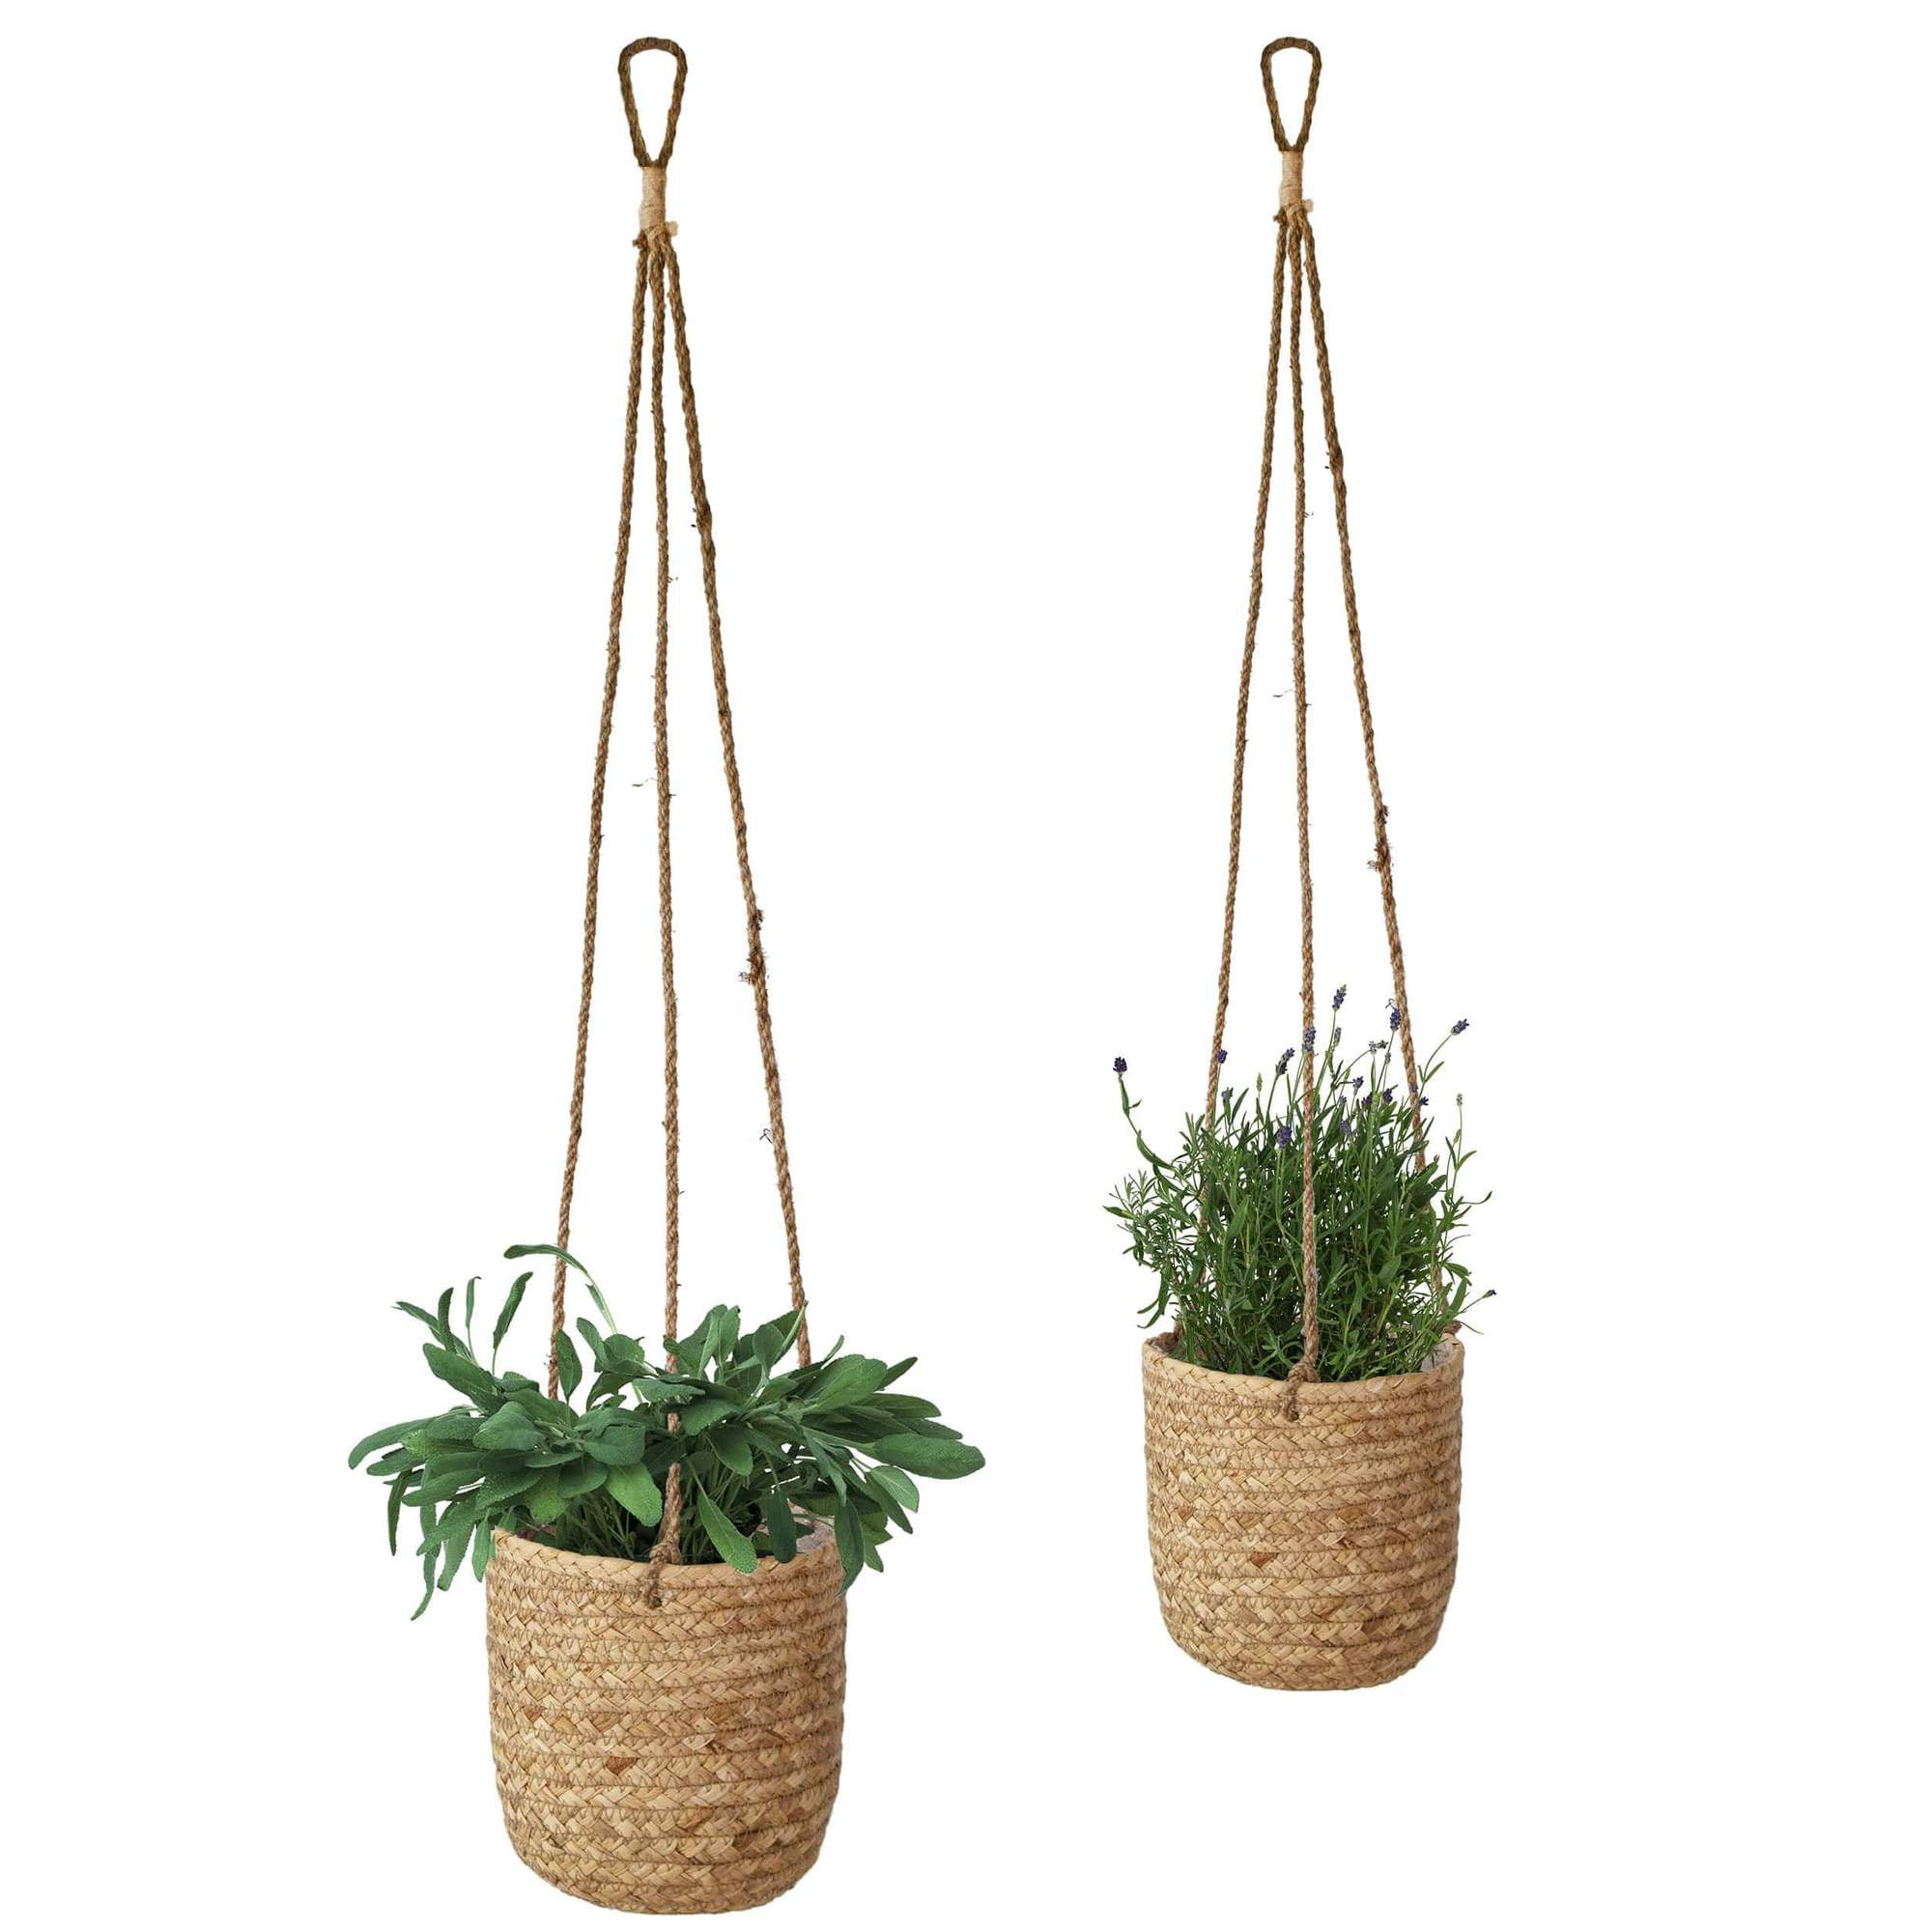 Modern Rattan style flower pot hanging baskets new design pots 4 colours 2 sizes 